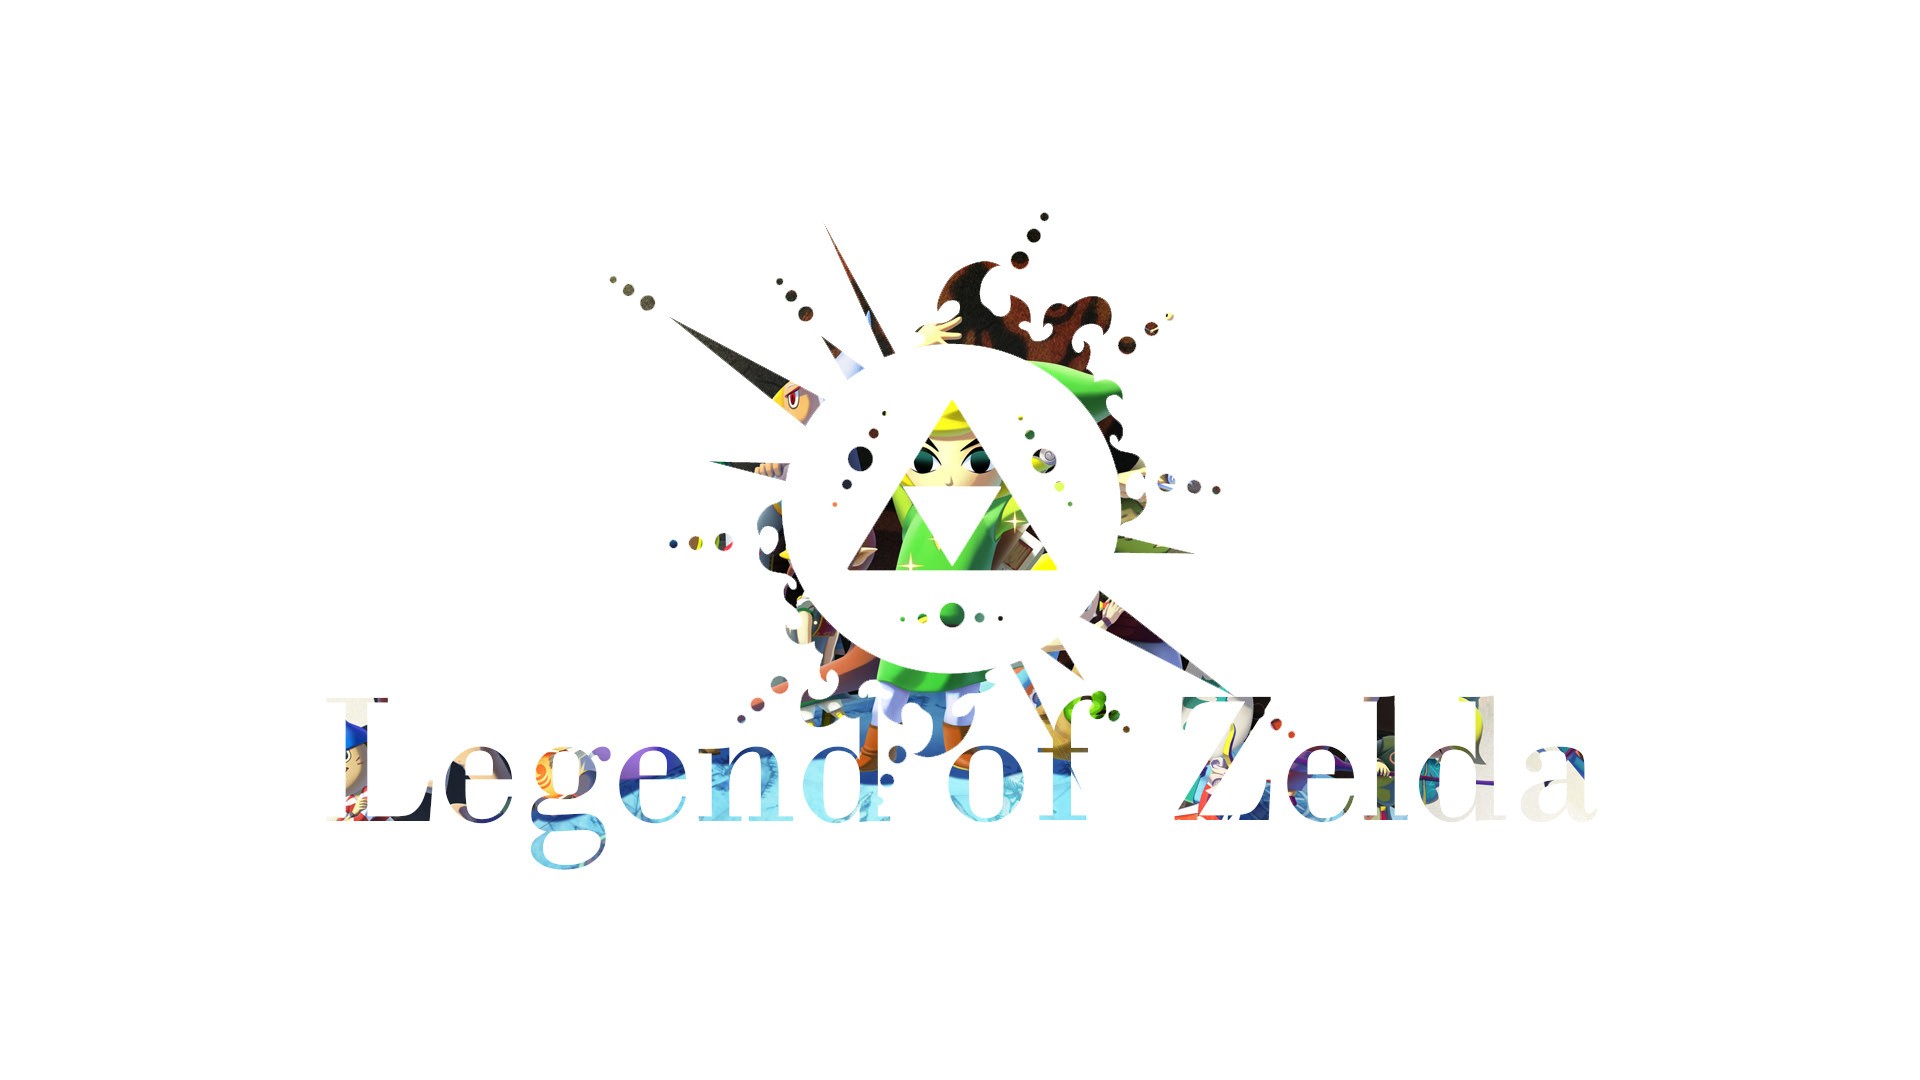 Legend Of Zelda Logo Game Wallpaper Hd Games 4k Wallpapers Images Photos And Background Wallpapers Den